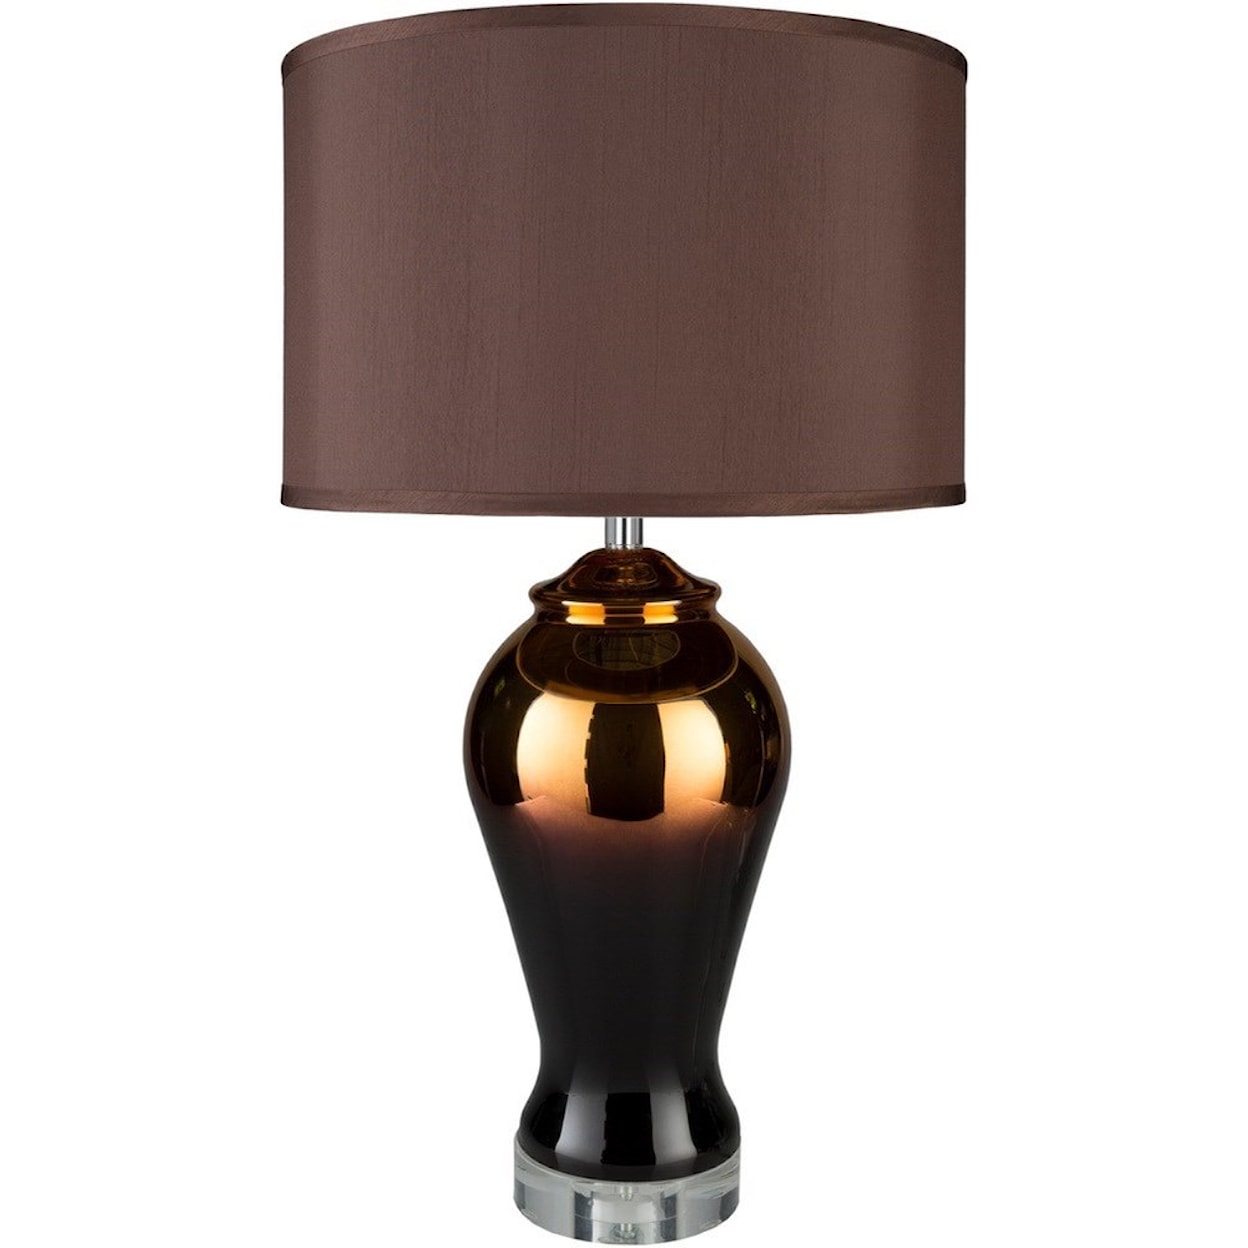 Surya Heathman Table Lamp